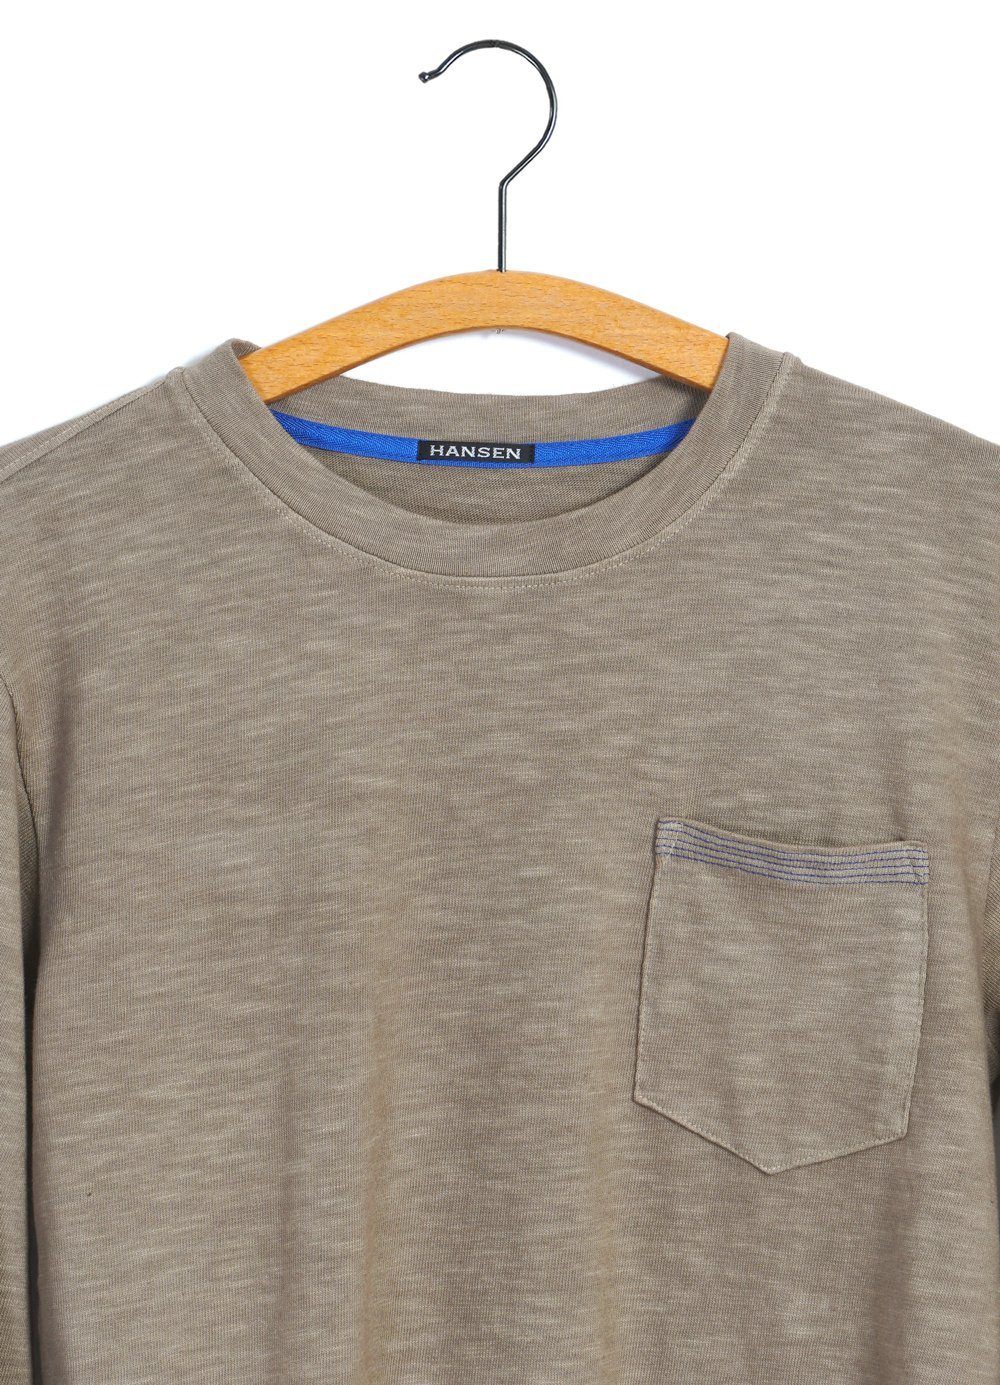 HANSEN GARMENTS - JONES | Long Sleeve Crew Neck Pocket T | Clay - HANSEN Garments